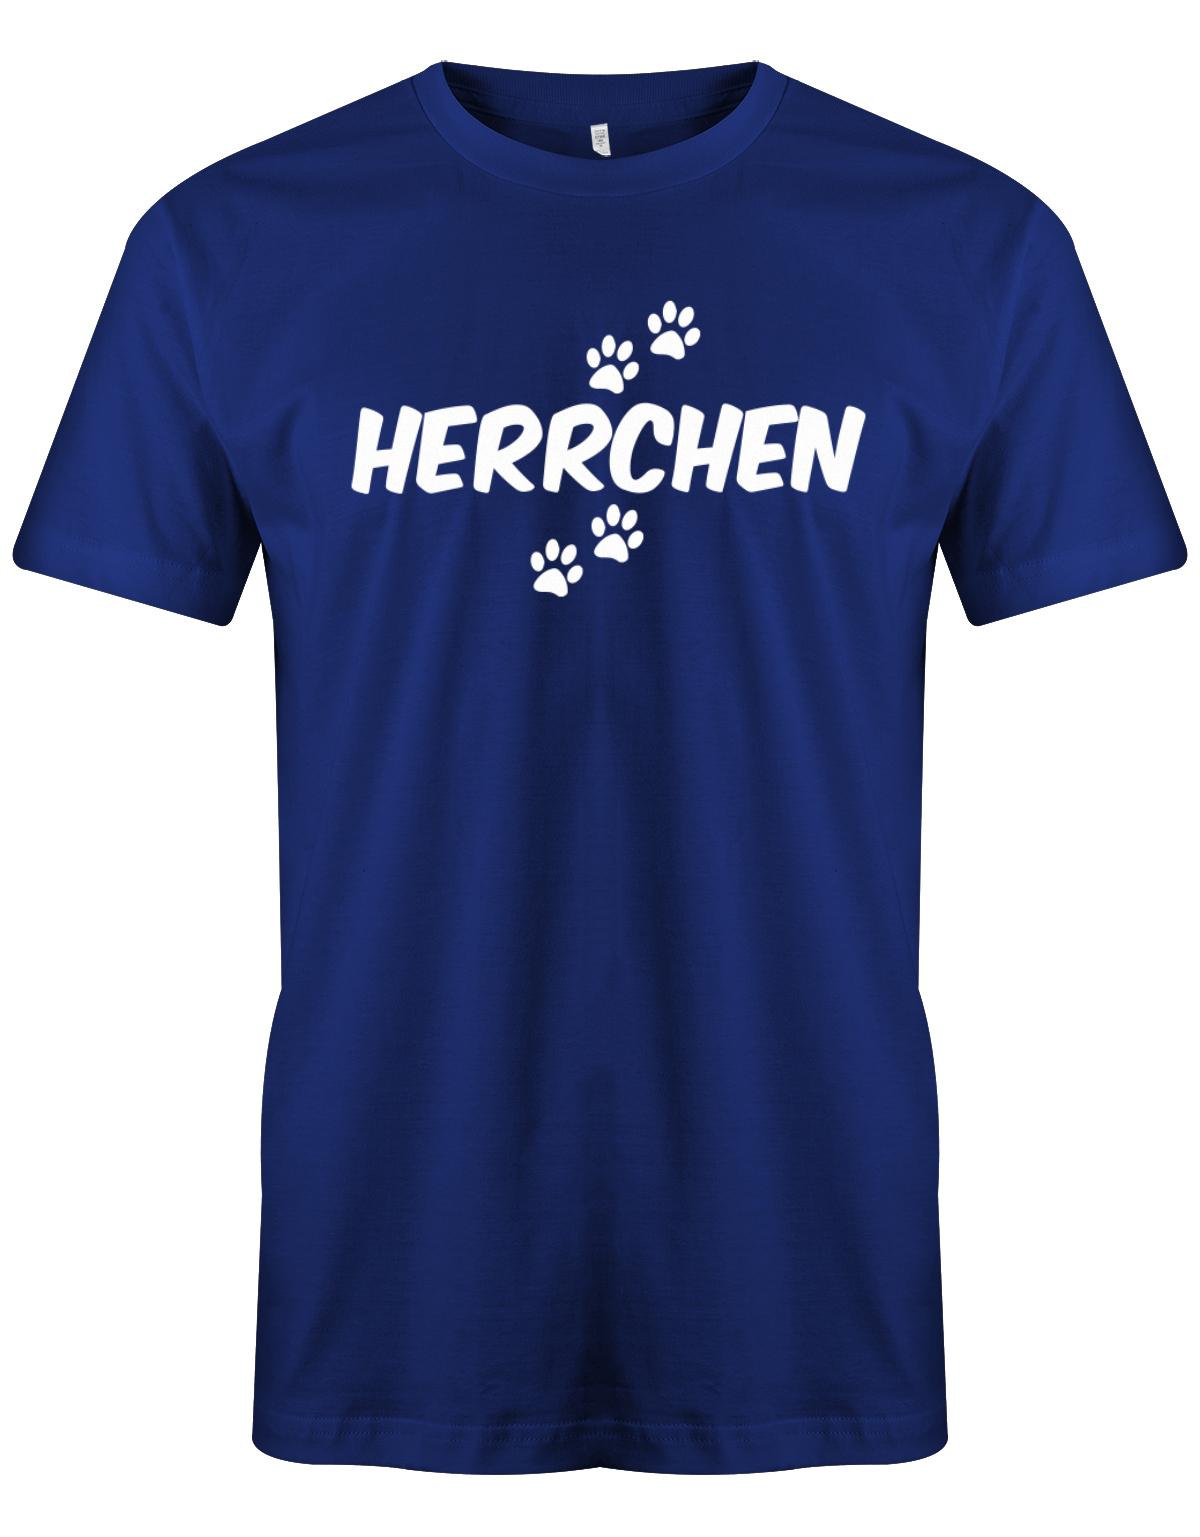 Herrchen-hundebesitzer-Herren-Shirt-Royalblau